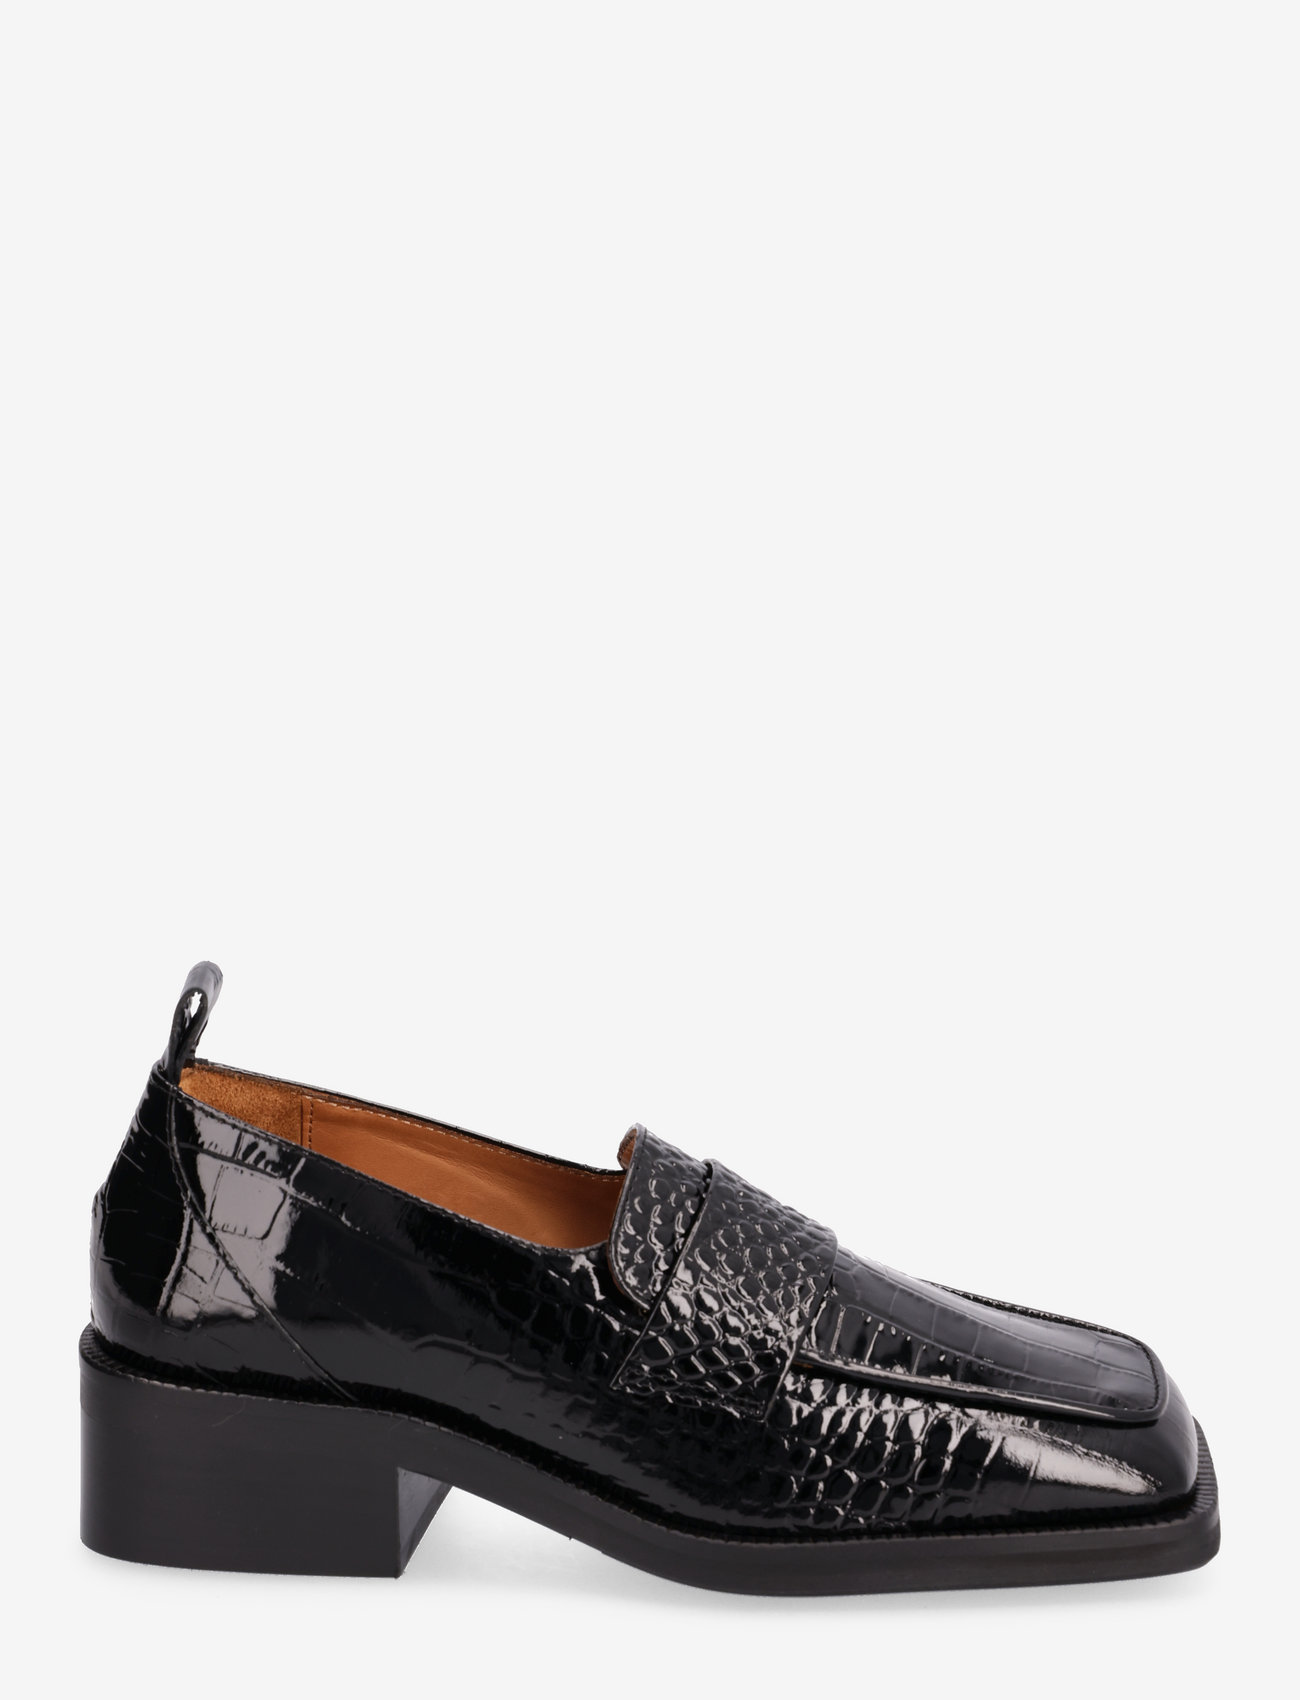 Billi Bi - Shoes - geburtstagsgeschenke - black croco patent - 1